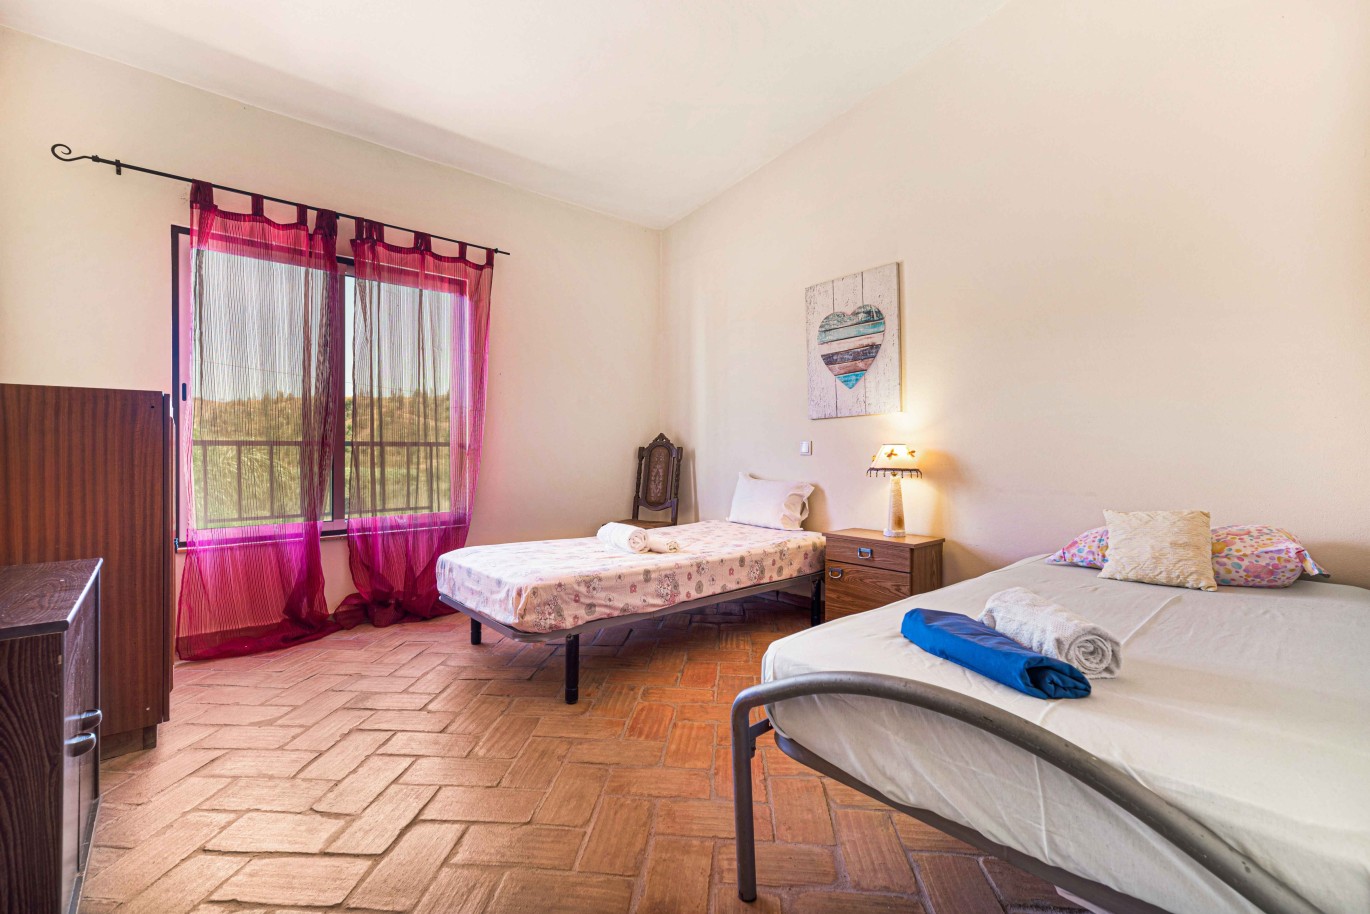 9 Bedroom Country Villa à vendre à Pereira, Algarve_231604